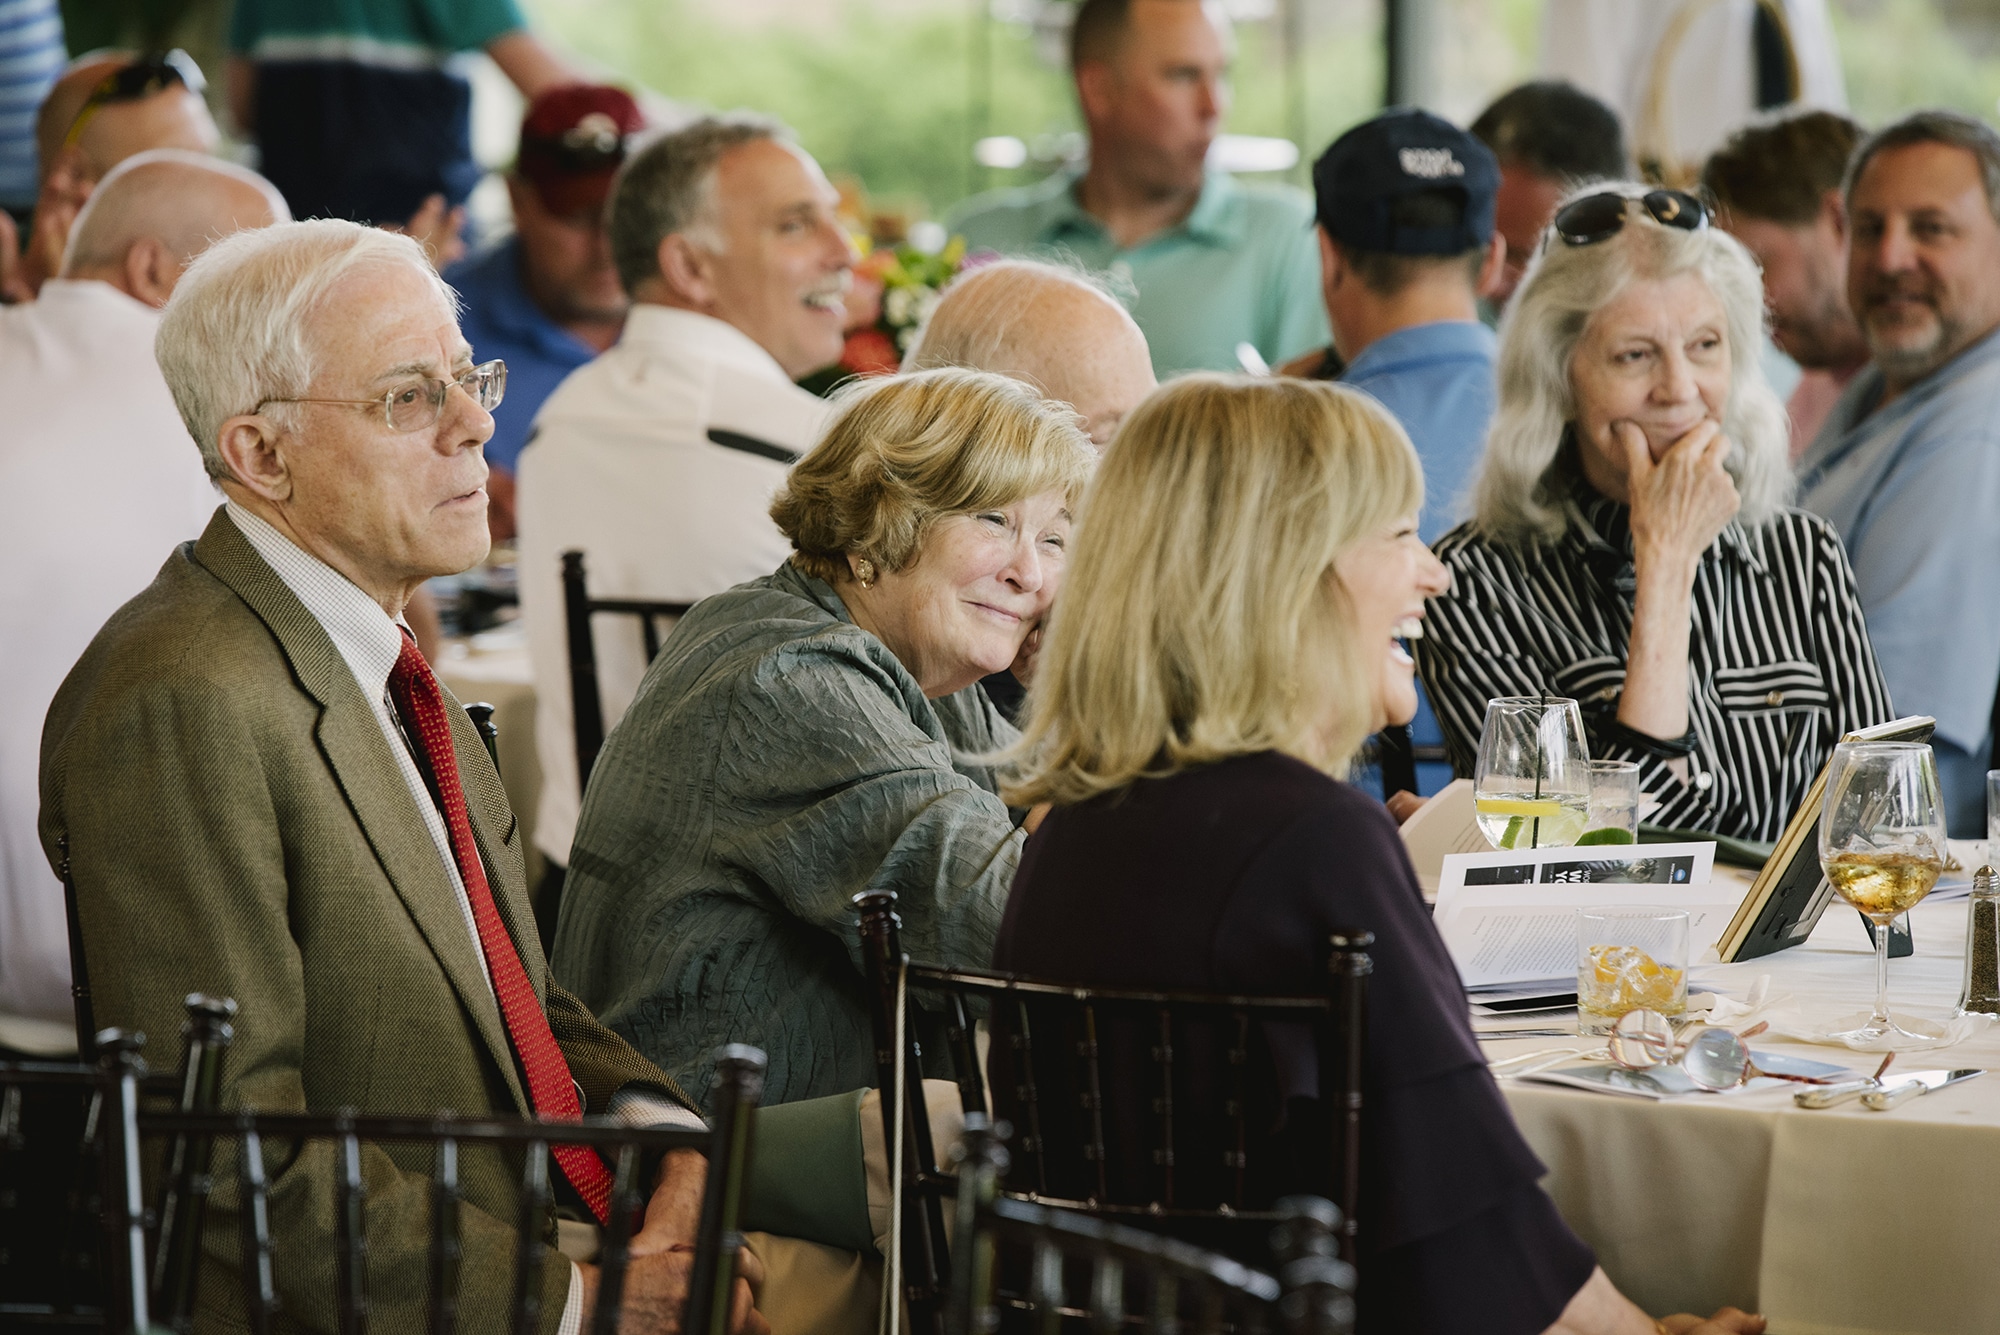 Community Options, Inc. iMatter Spring Golf Classic on Monday, May 21, 2018 at TPC Jasna Polana in Princeton, NJ.